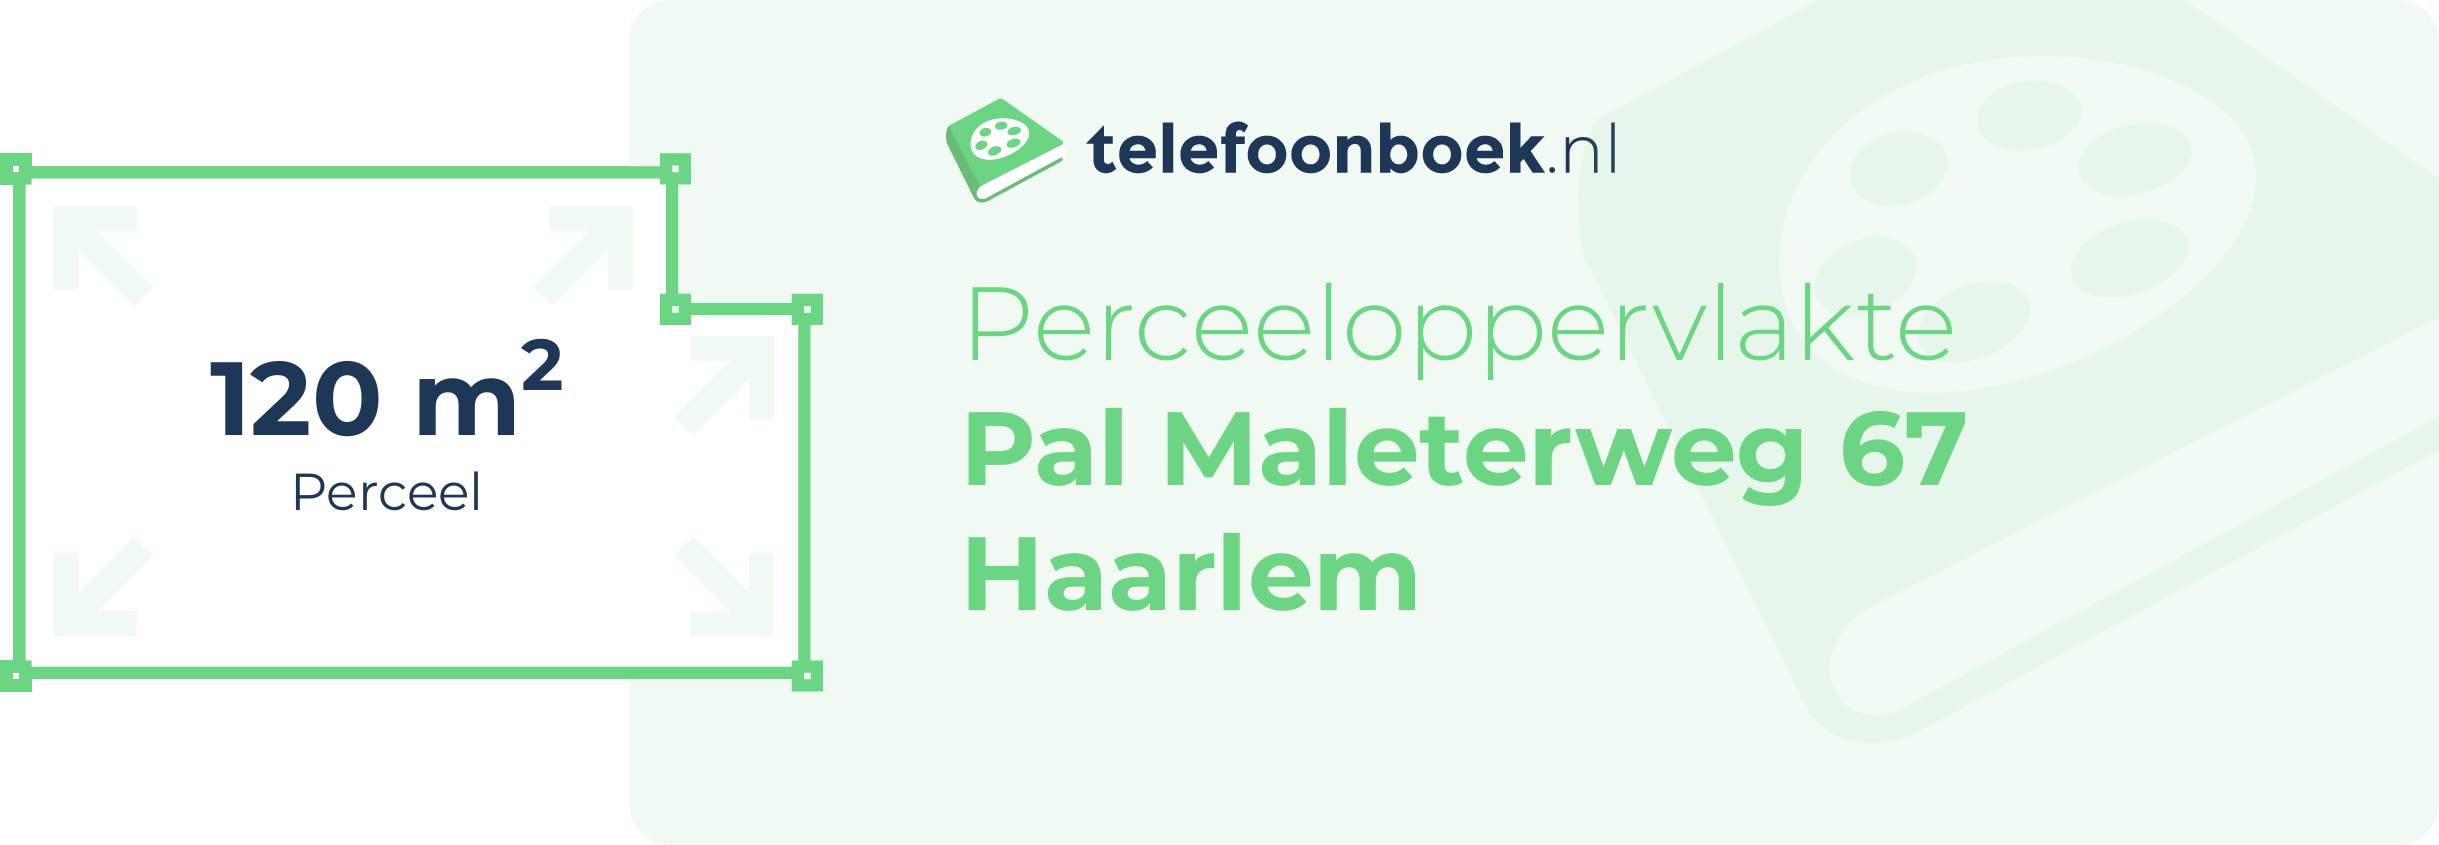 Perceeloppervlakte Pal Maleterweg 67 Haarlem